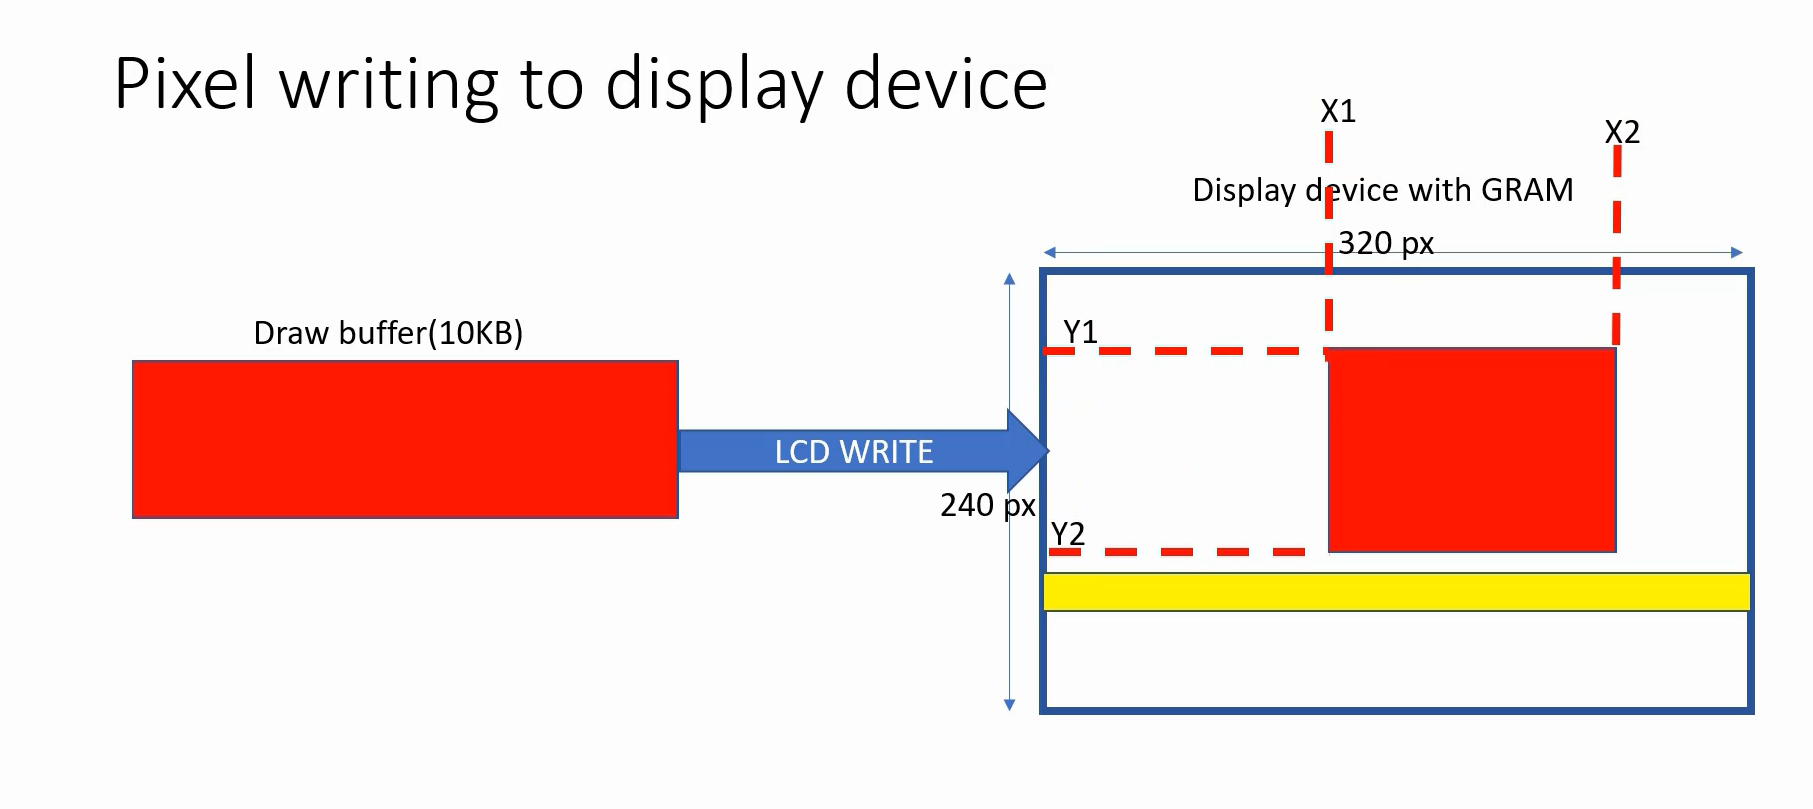 Figure 5. Pixel writing to display device